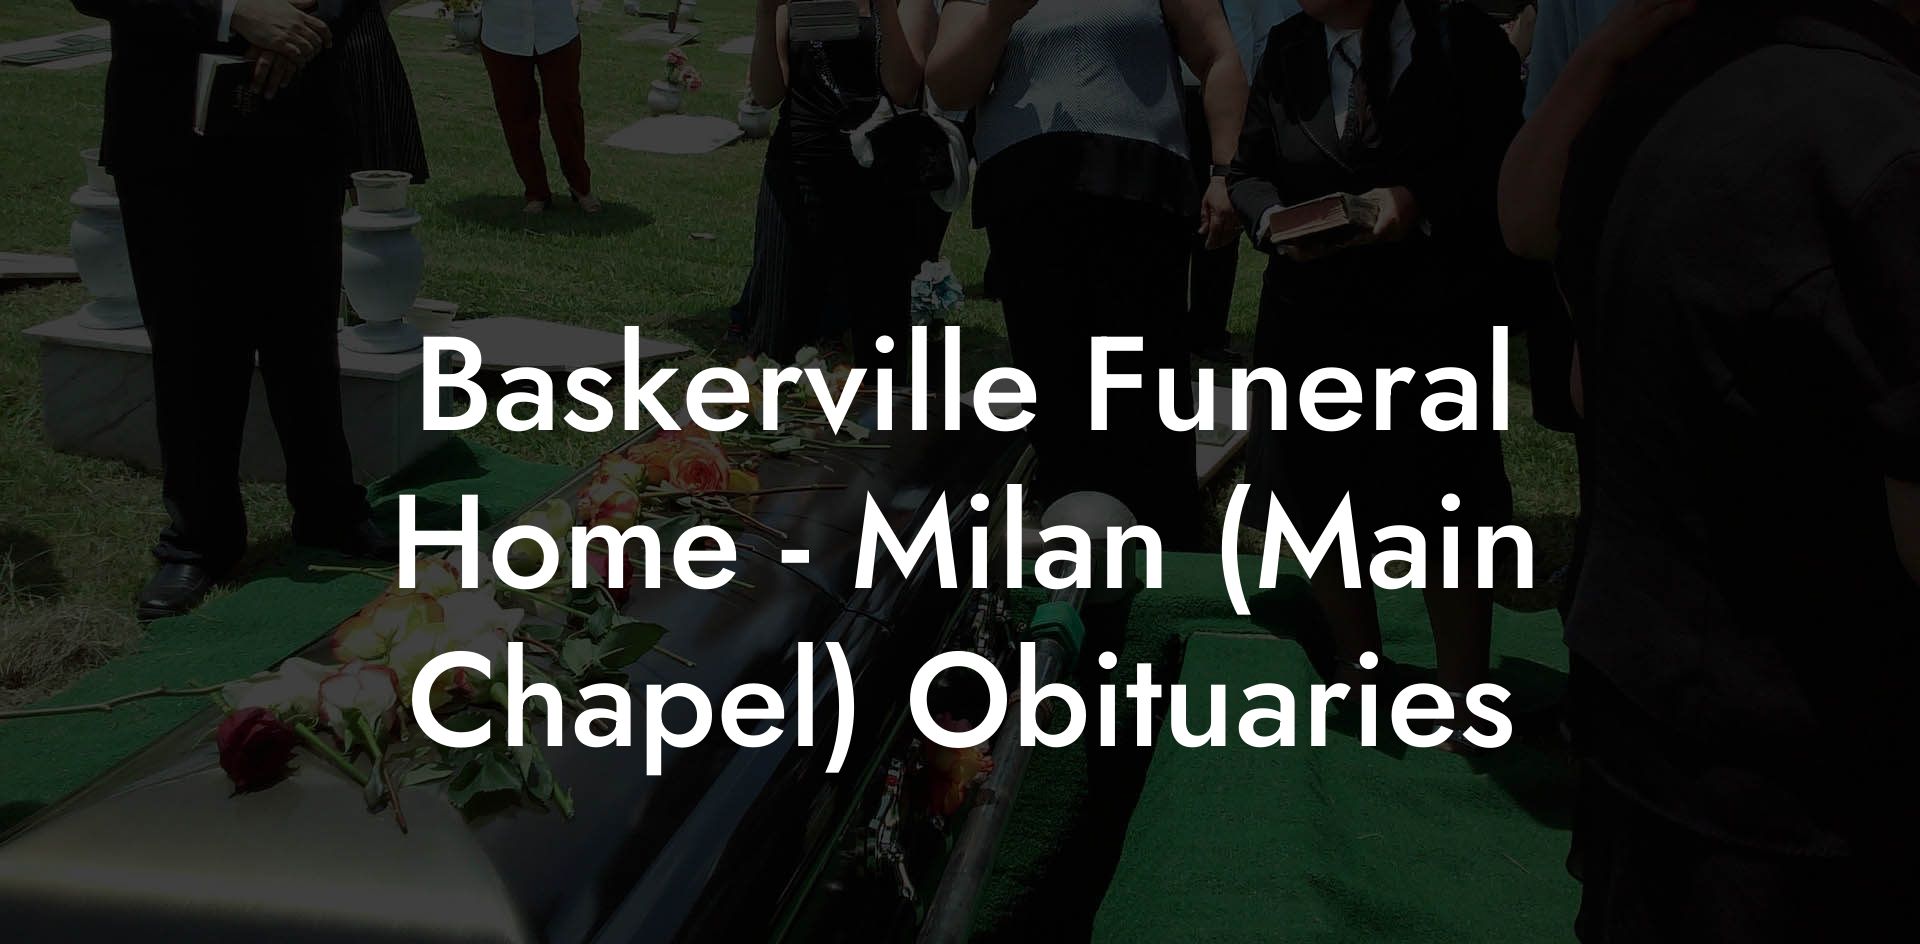 Baskerville Funeral Home - Milan (Main Chapel) Obituaries